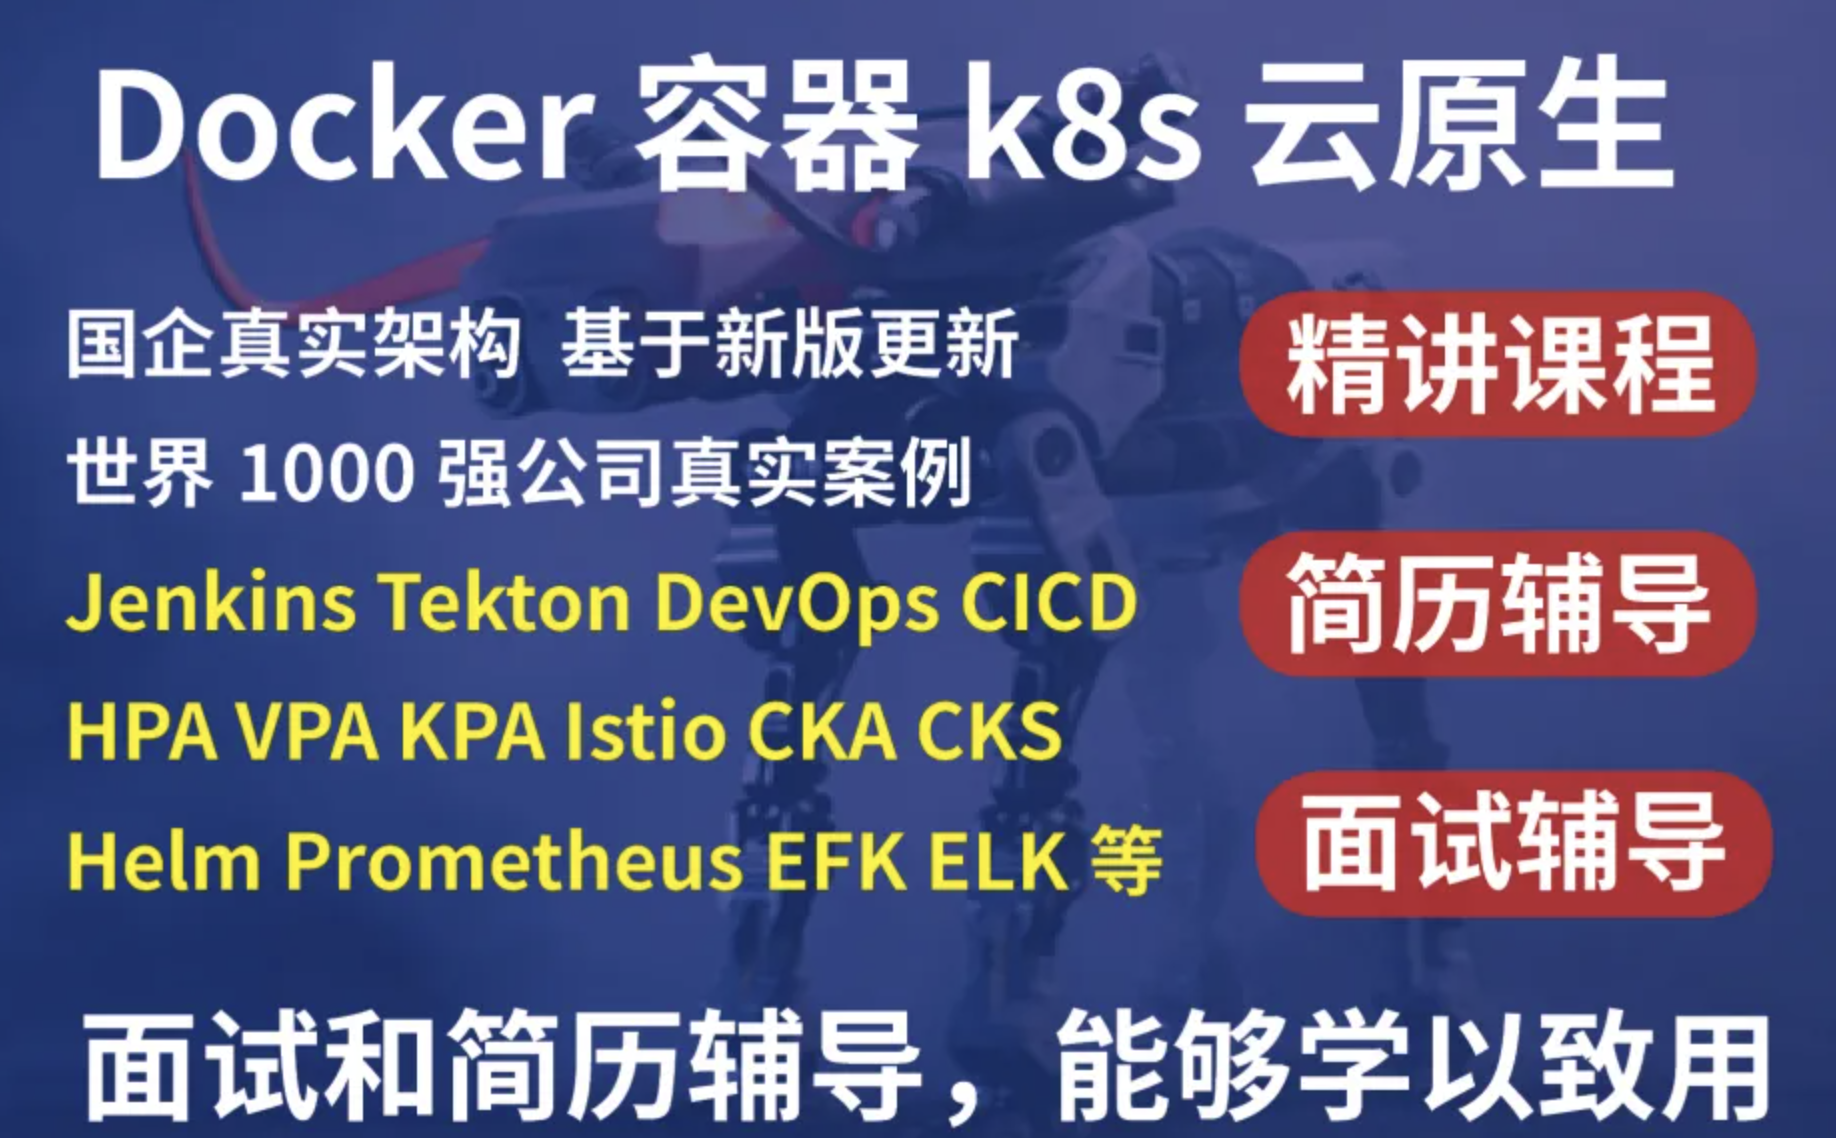 kubernetes/k8s+DevOps云原生全栈技术:基于世界1000强实战课程封面图